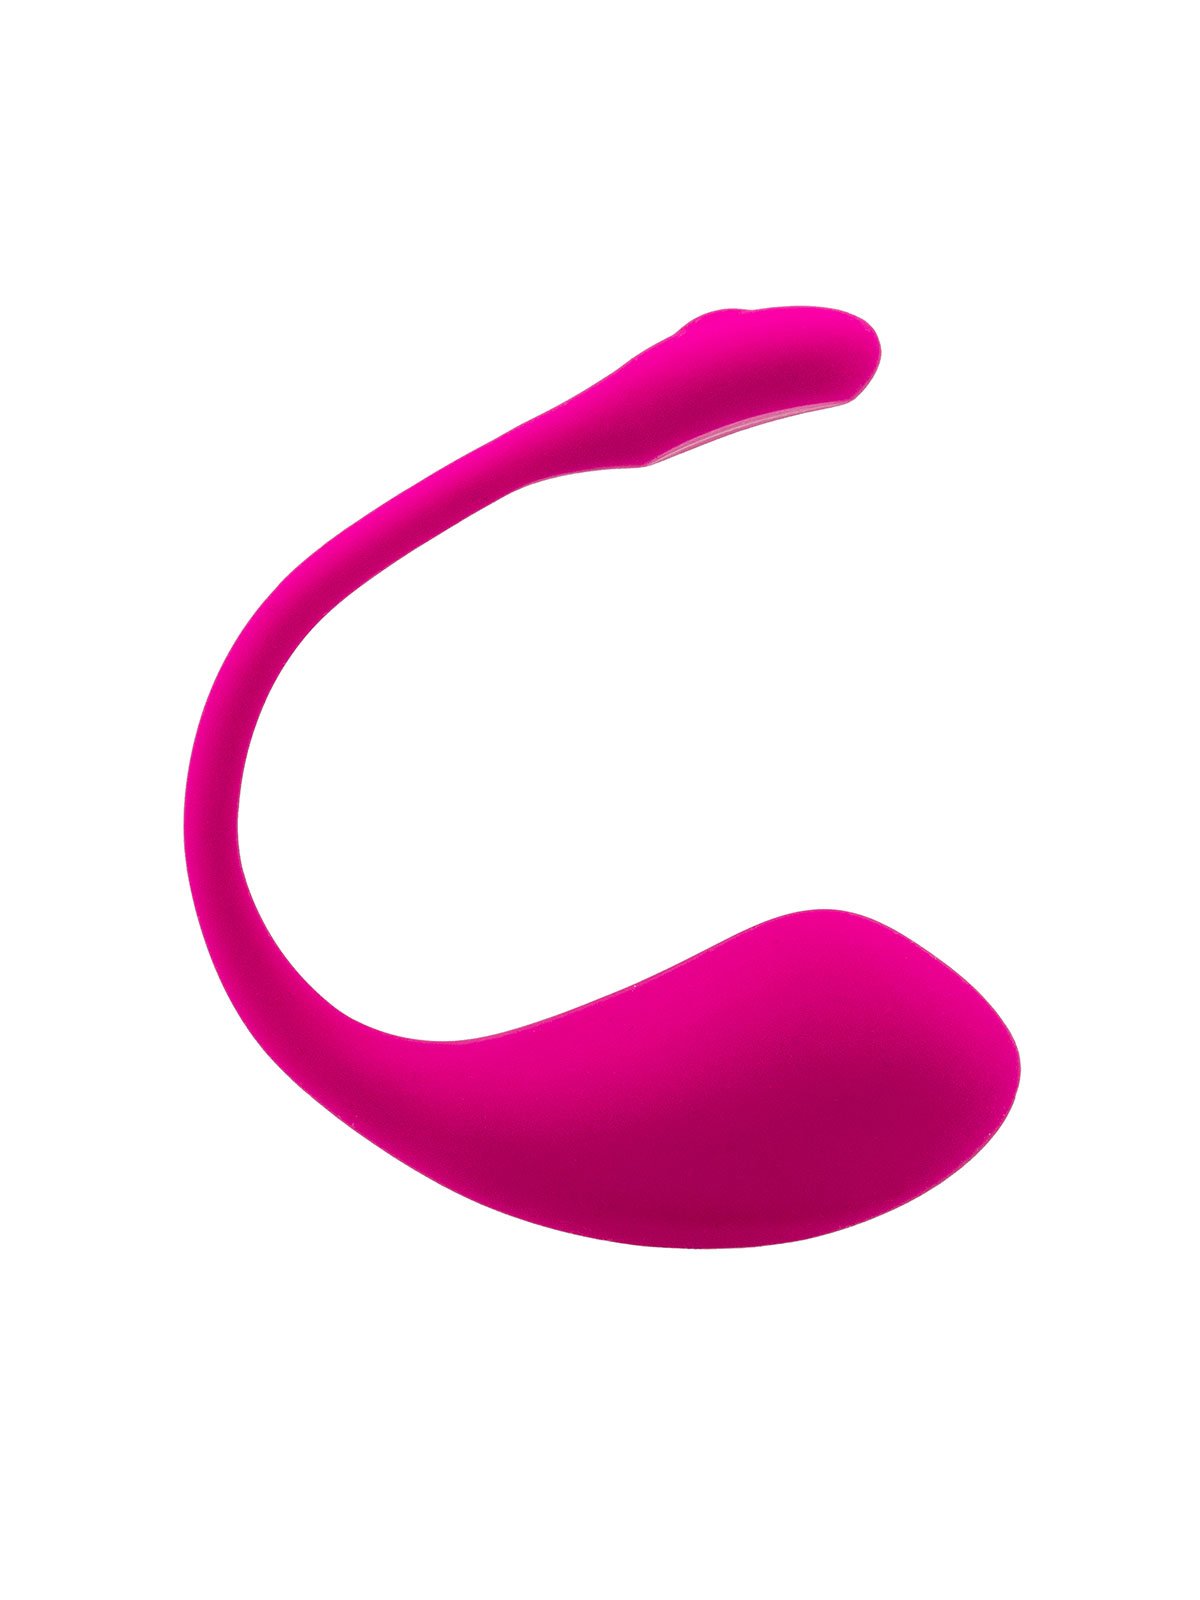  Plug Lush 2 - Bluetooth Vibrator | Pink